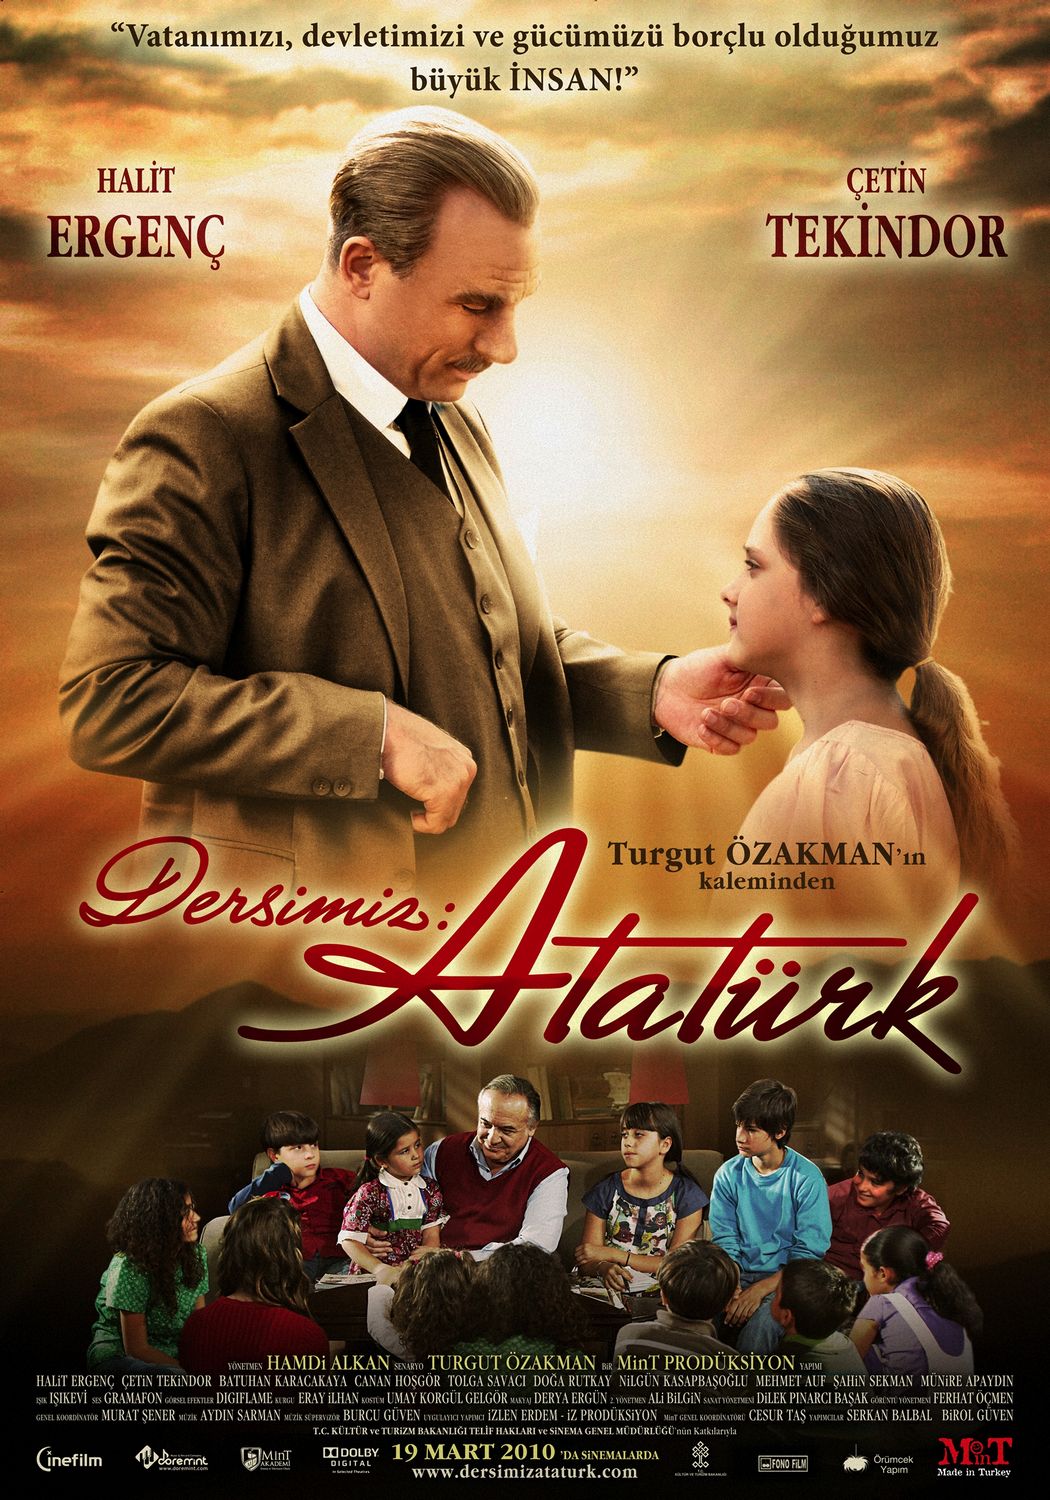 Extra Large Movie Poster Image for Dersimiz: Ataturk (#2 of 3)